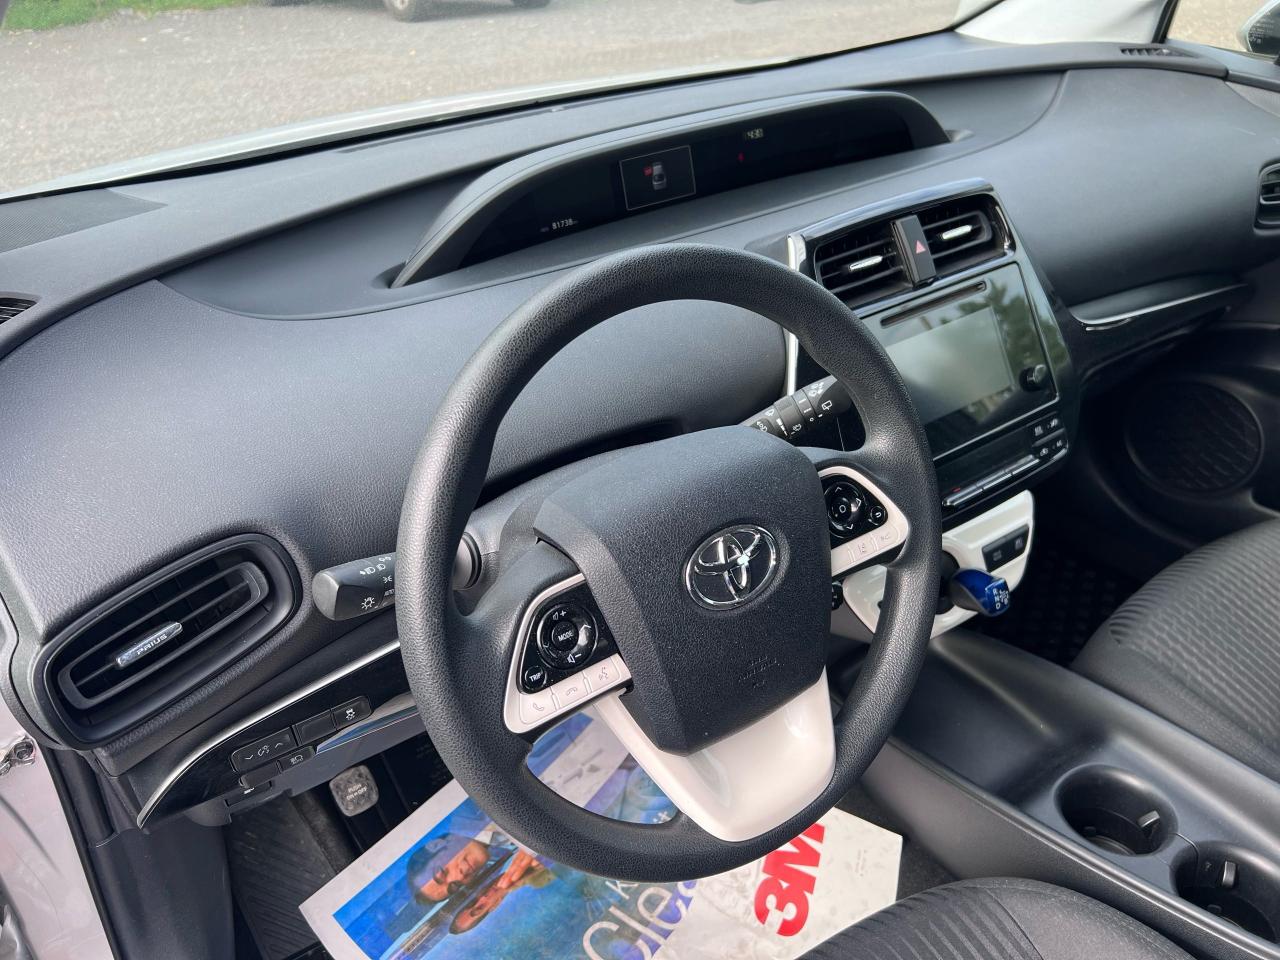 Toyota Prius 2016 Dashboard